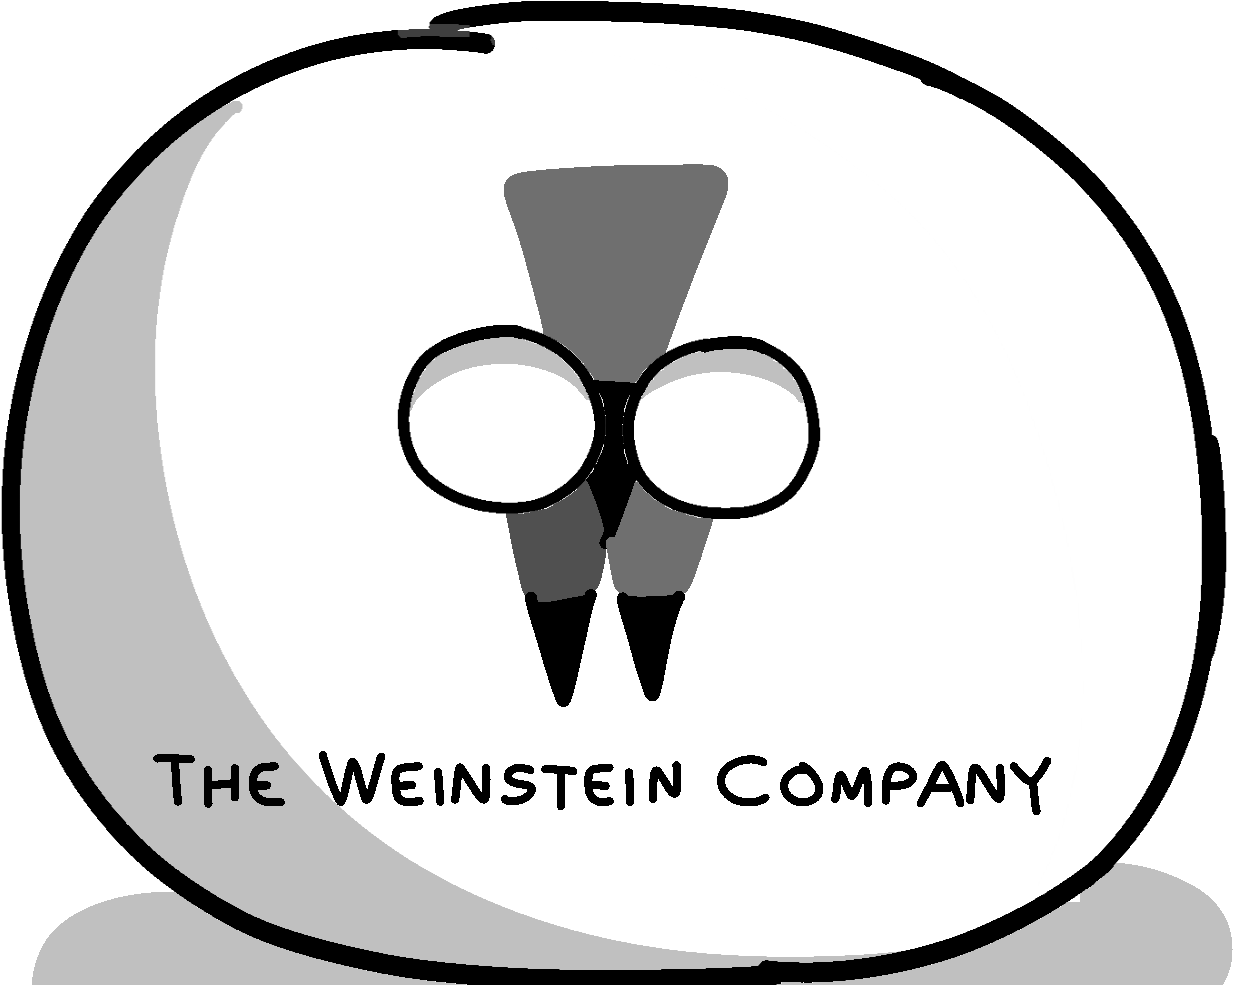 A Logo Of A Company